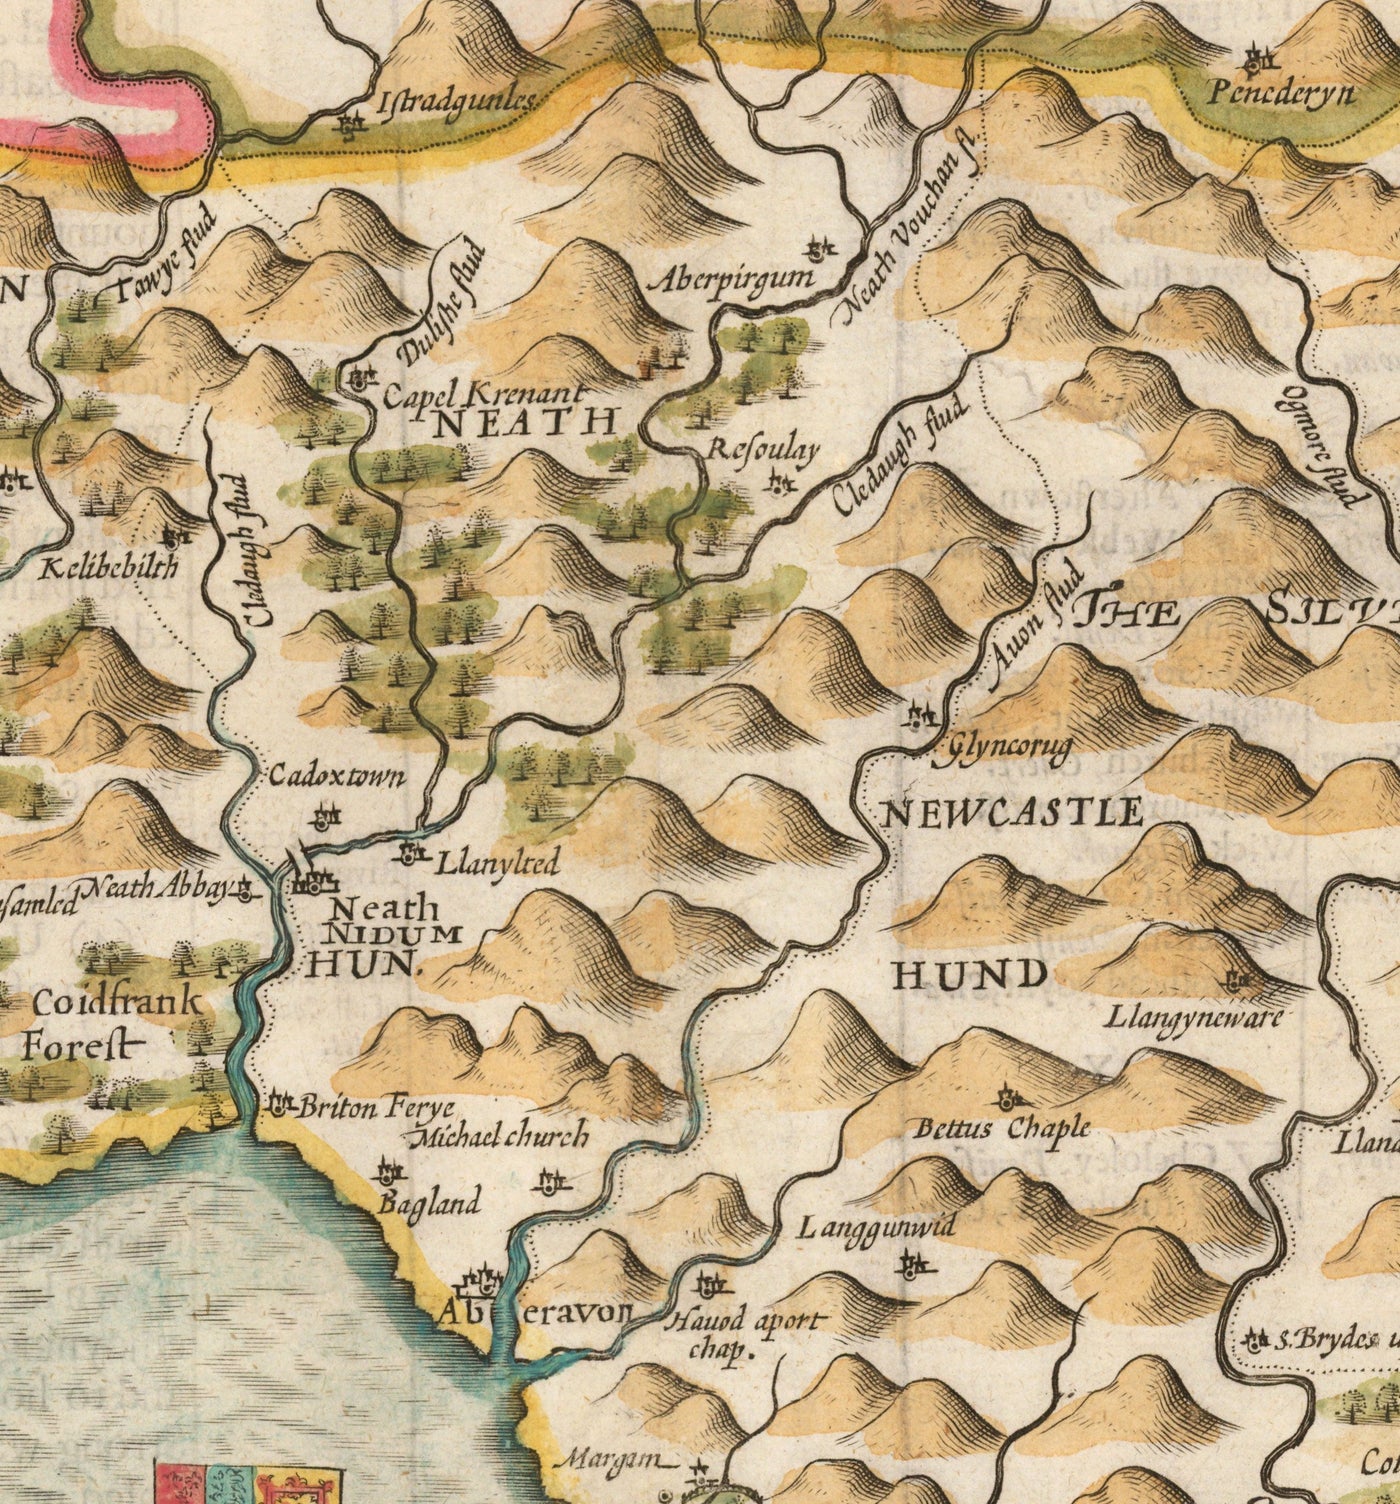 Old Map of Glamorgan Wales, 1611 by John Speed - Cardiff, Swansea, Bridgend, Port Talbot, Barry